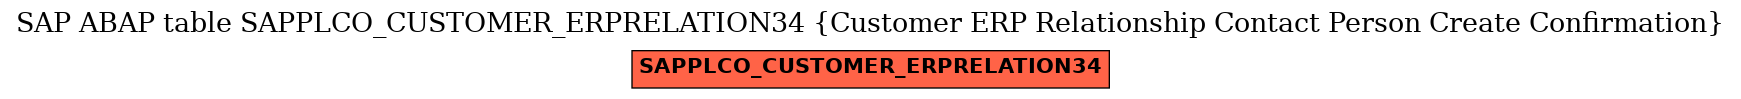 E-R Diagram for table SAPPLCO_CUSTOMER_ERPRELATION34 (Customer ERP Relationship Contact Person Create Confirmation)